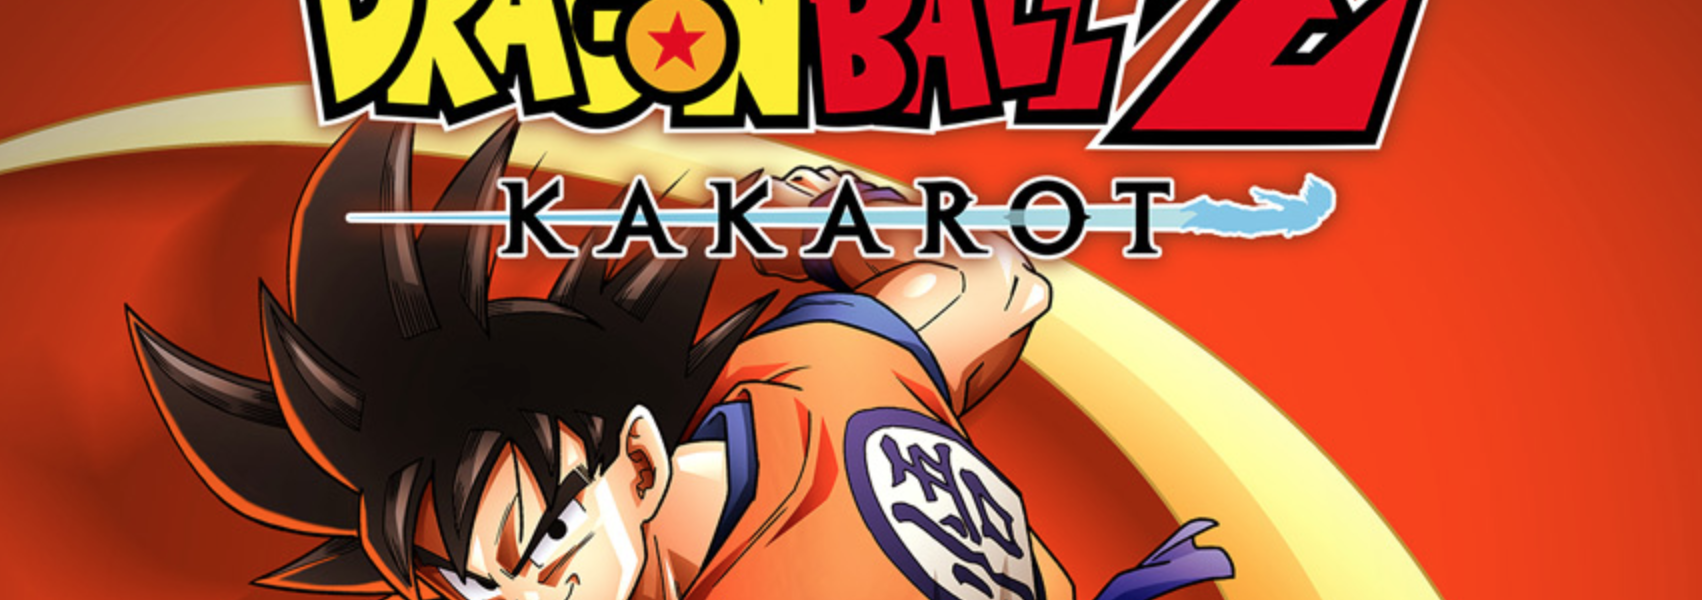 Dragon Ball Kakarot - Couverture